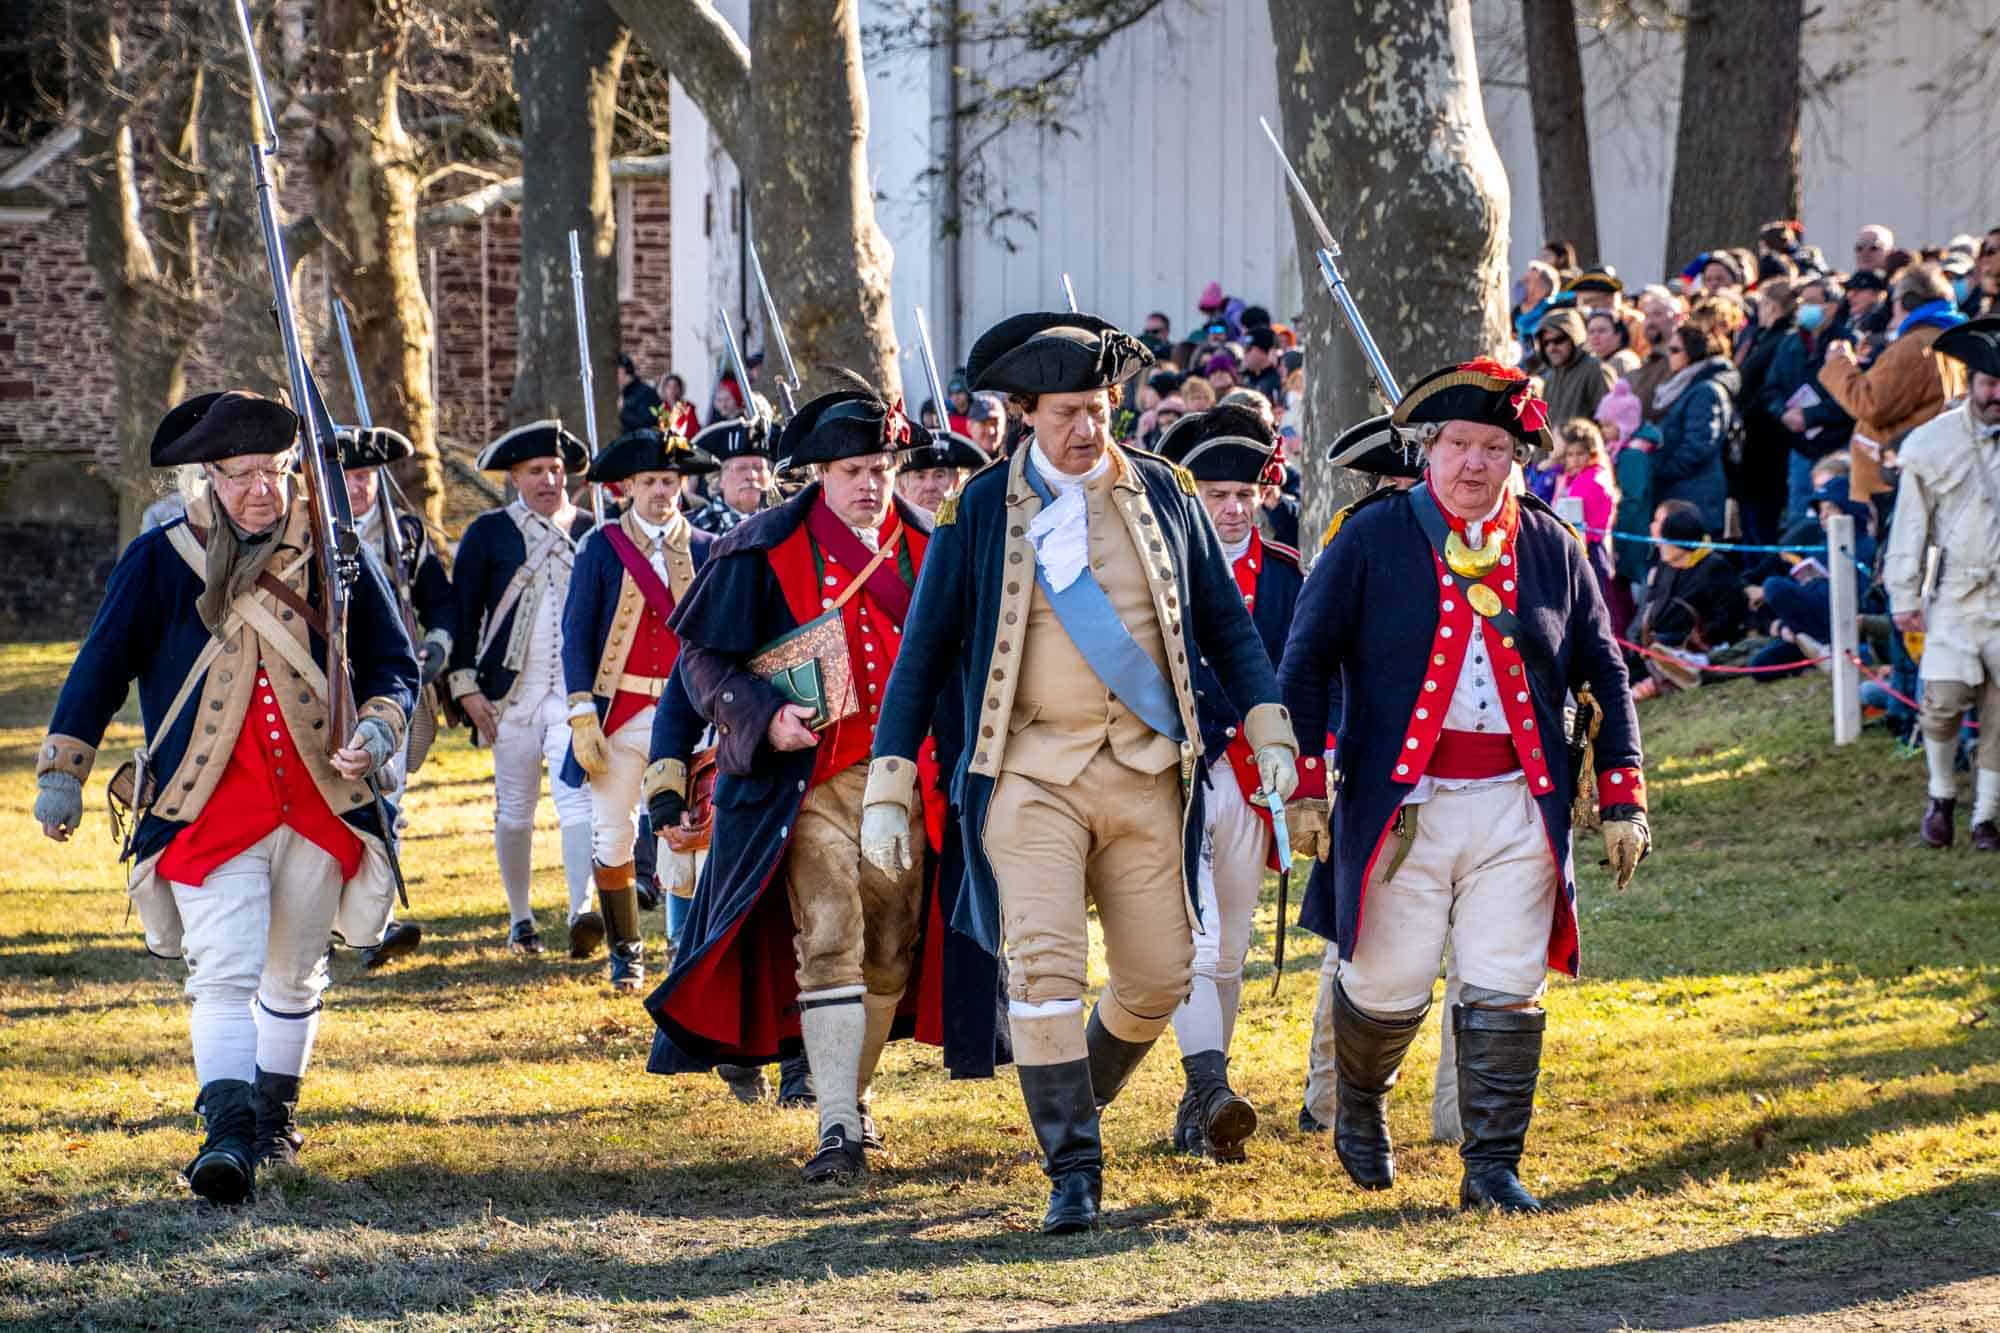 Reenactors in Revolutionary War uniforms, including George Washington, marching at the Washington Crossing reenactment